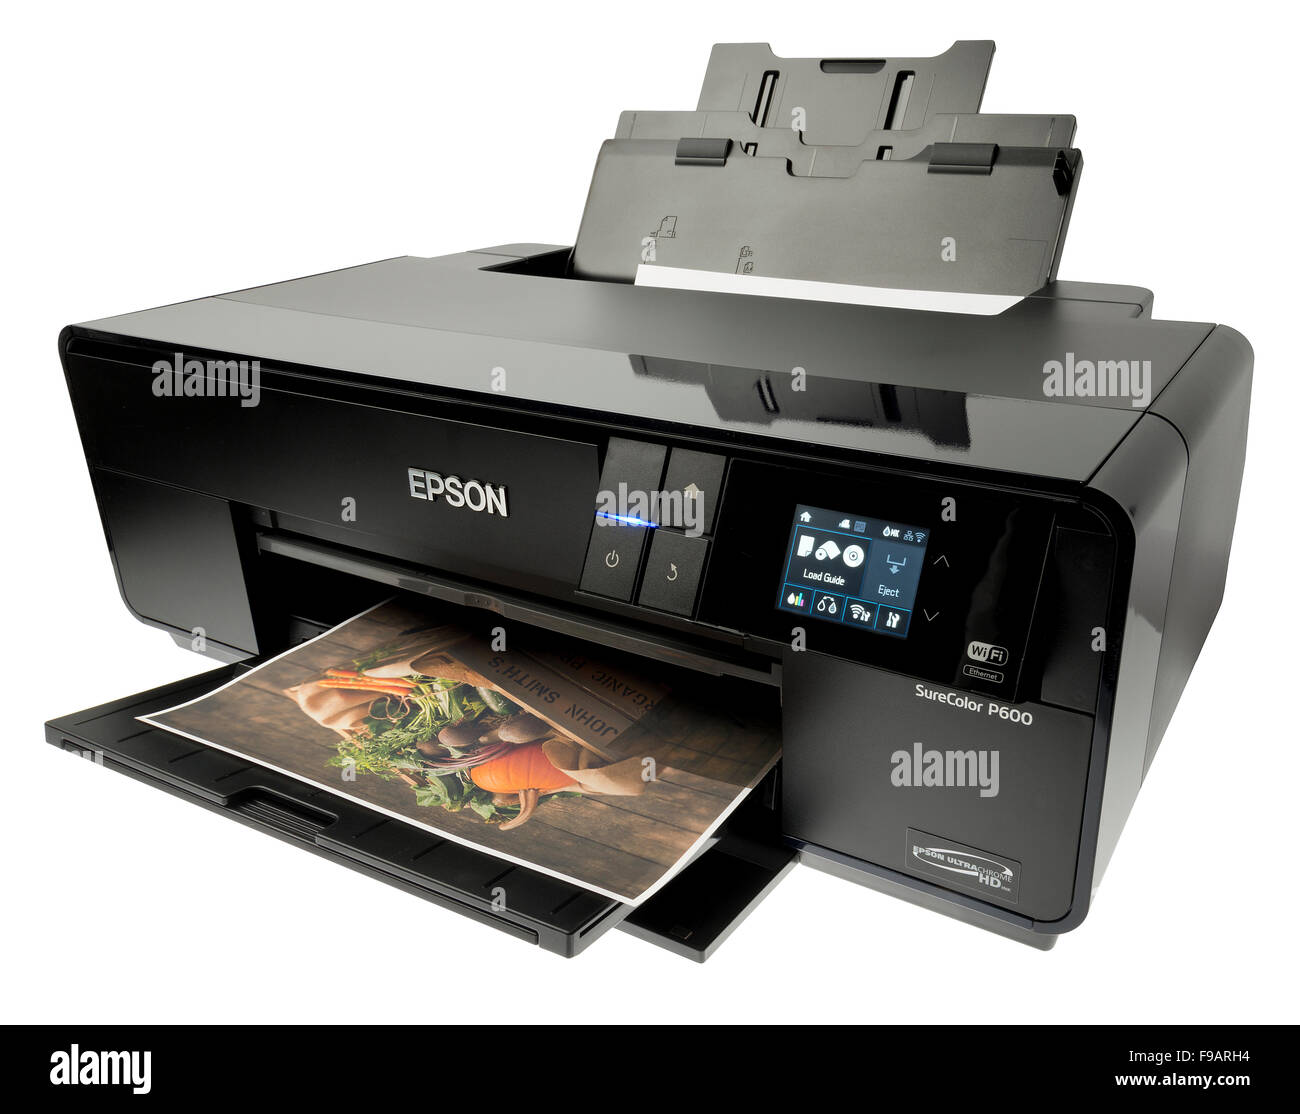 Epson SureColor SC-P600 A3 + Drucker. Fotoabzüge in Profi-Qualität macht  Stockfotografie - Alamy